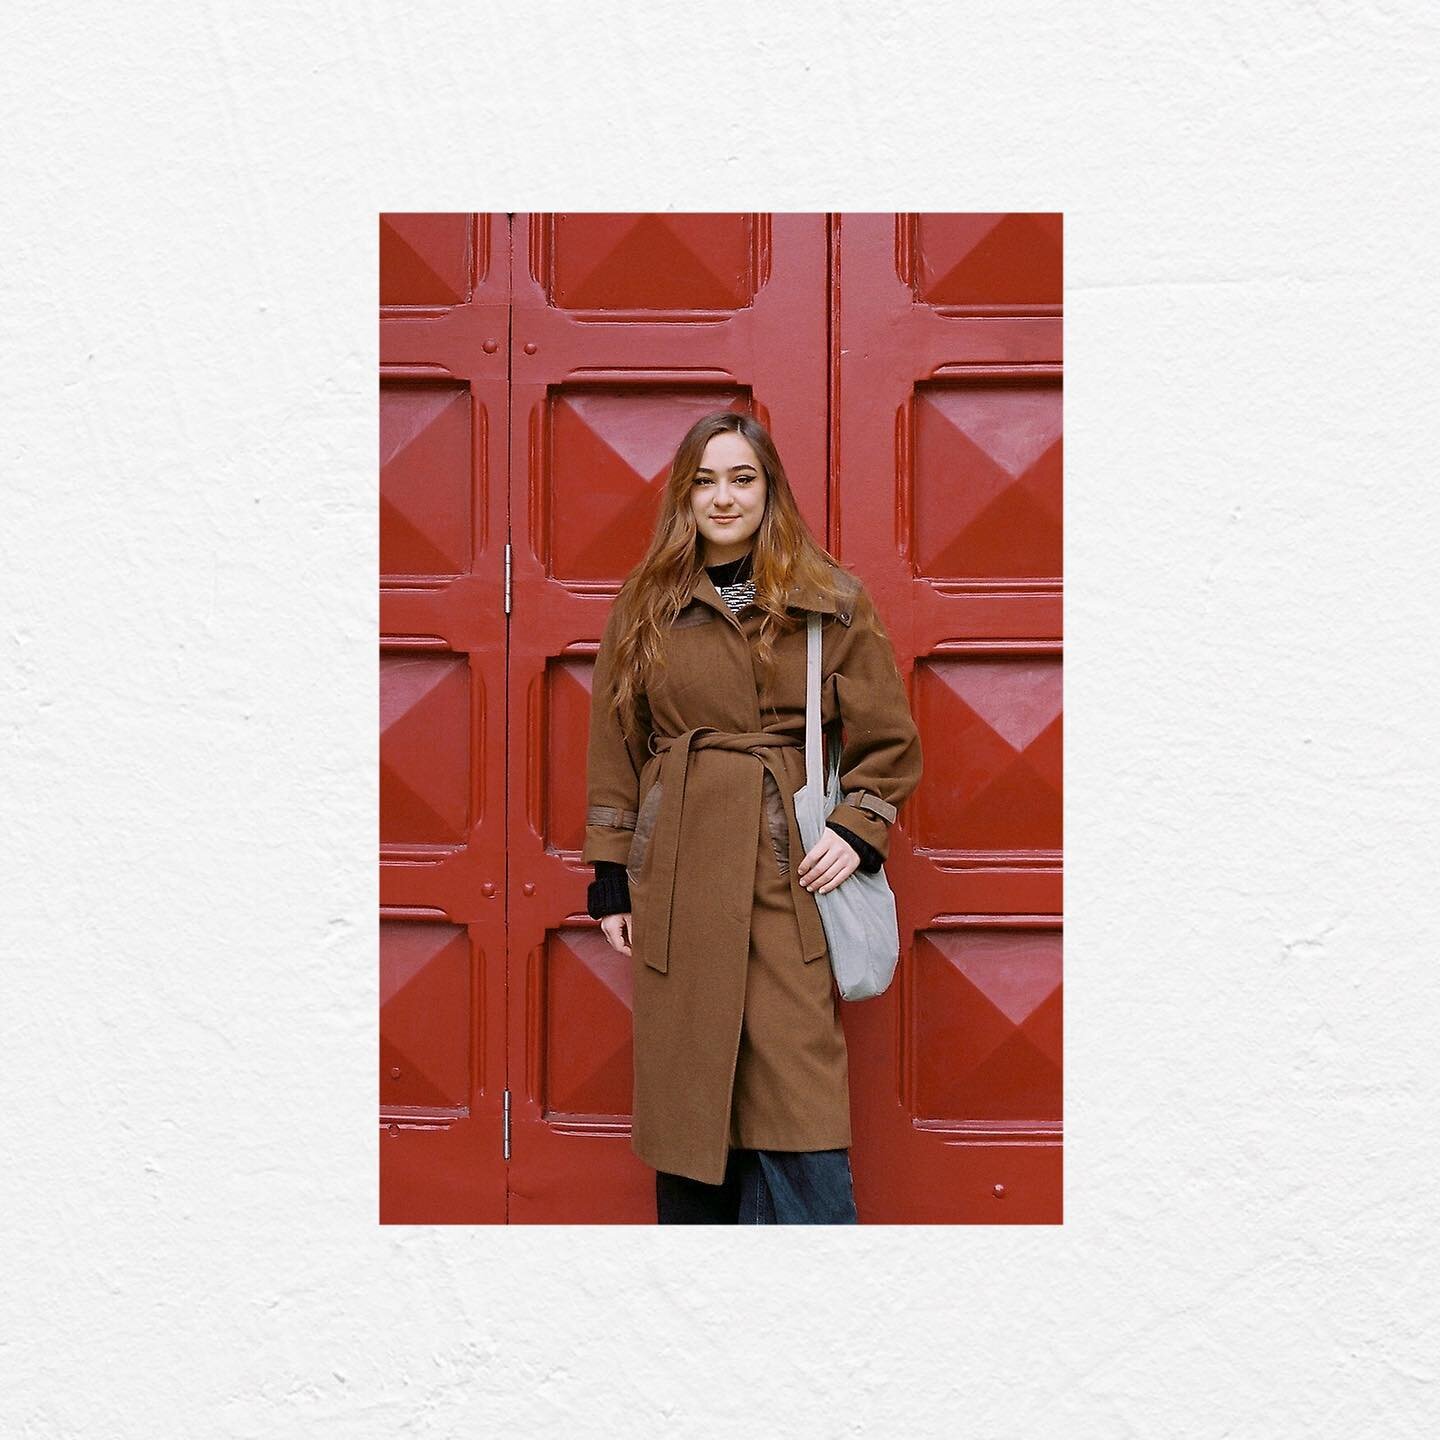 the stunning miss salganik!

#35mm #portra400 #film #canona1 #photography #design #dublin #ireland #gallery #red #door #photo #portra #lovedublin #dawsonstreet #art #irishart #camera #graphicdesign #filmphotography #filmphotographer #filmisnotdead